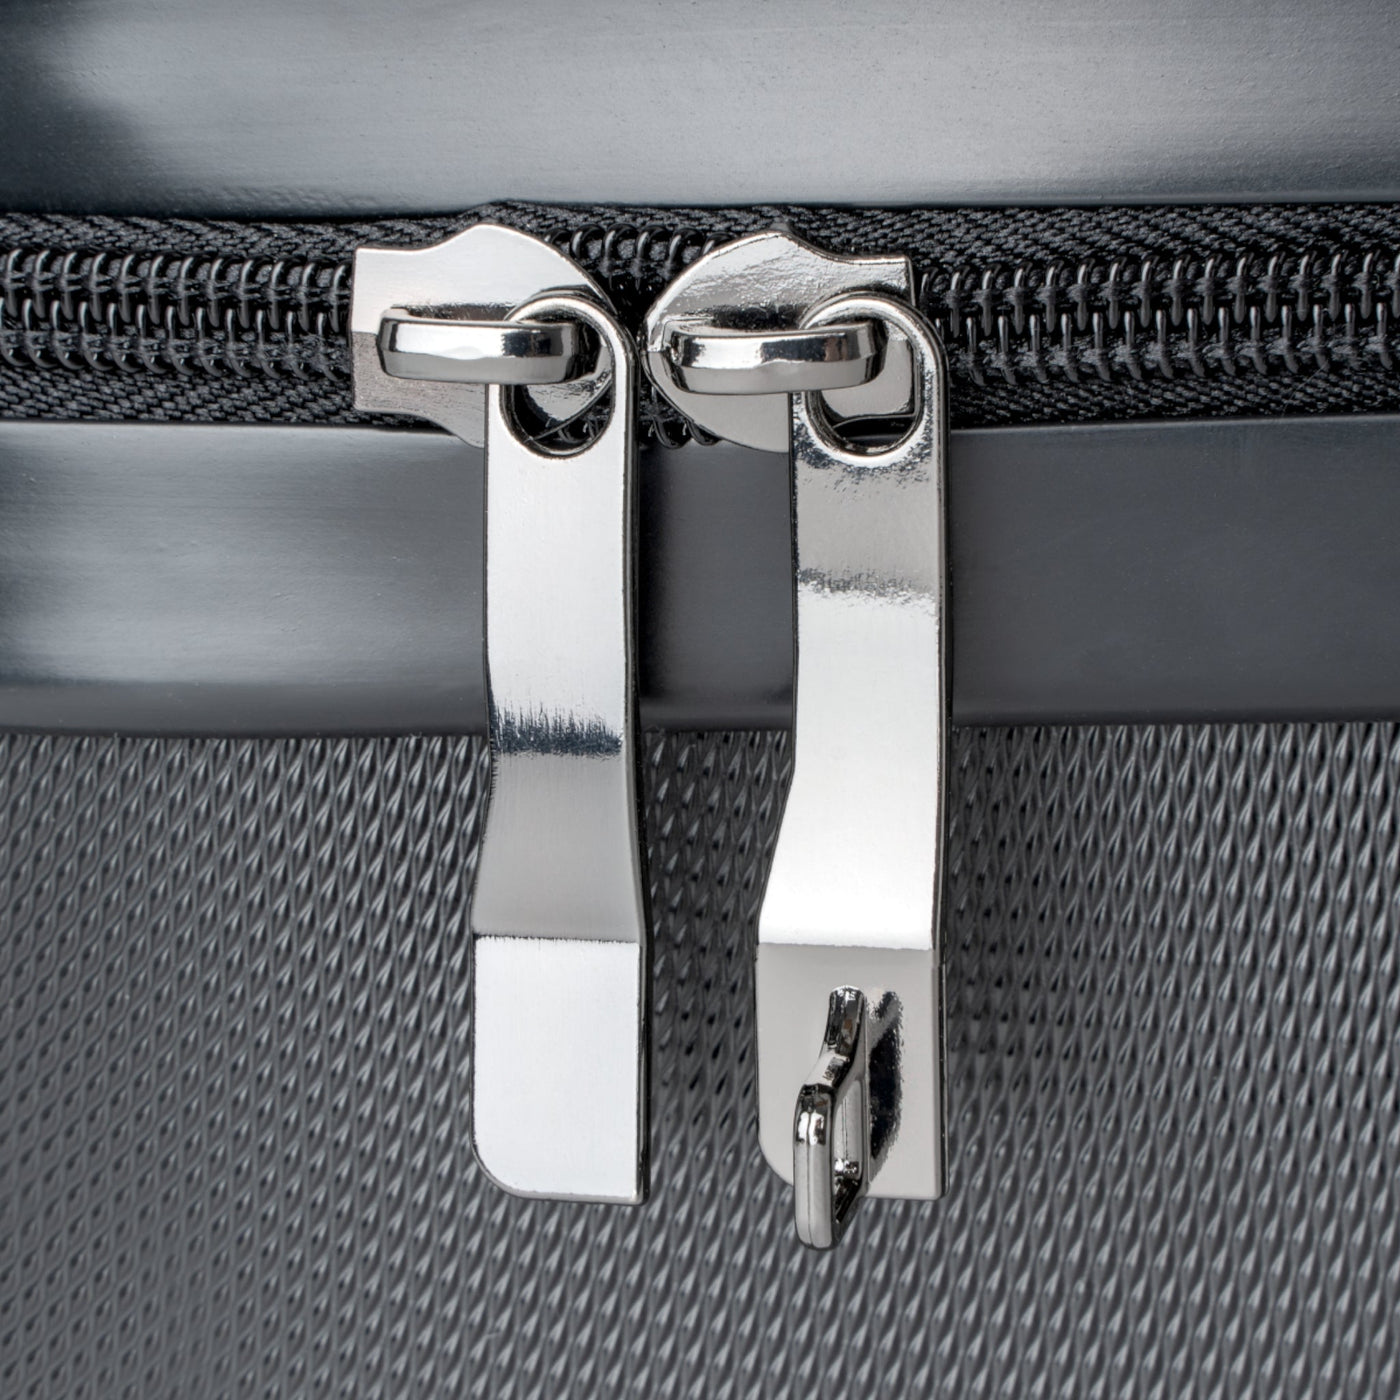 Dream-light Travel Suitcase (3 sizes)